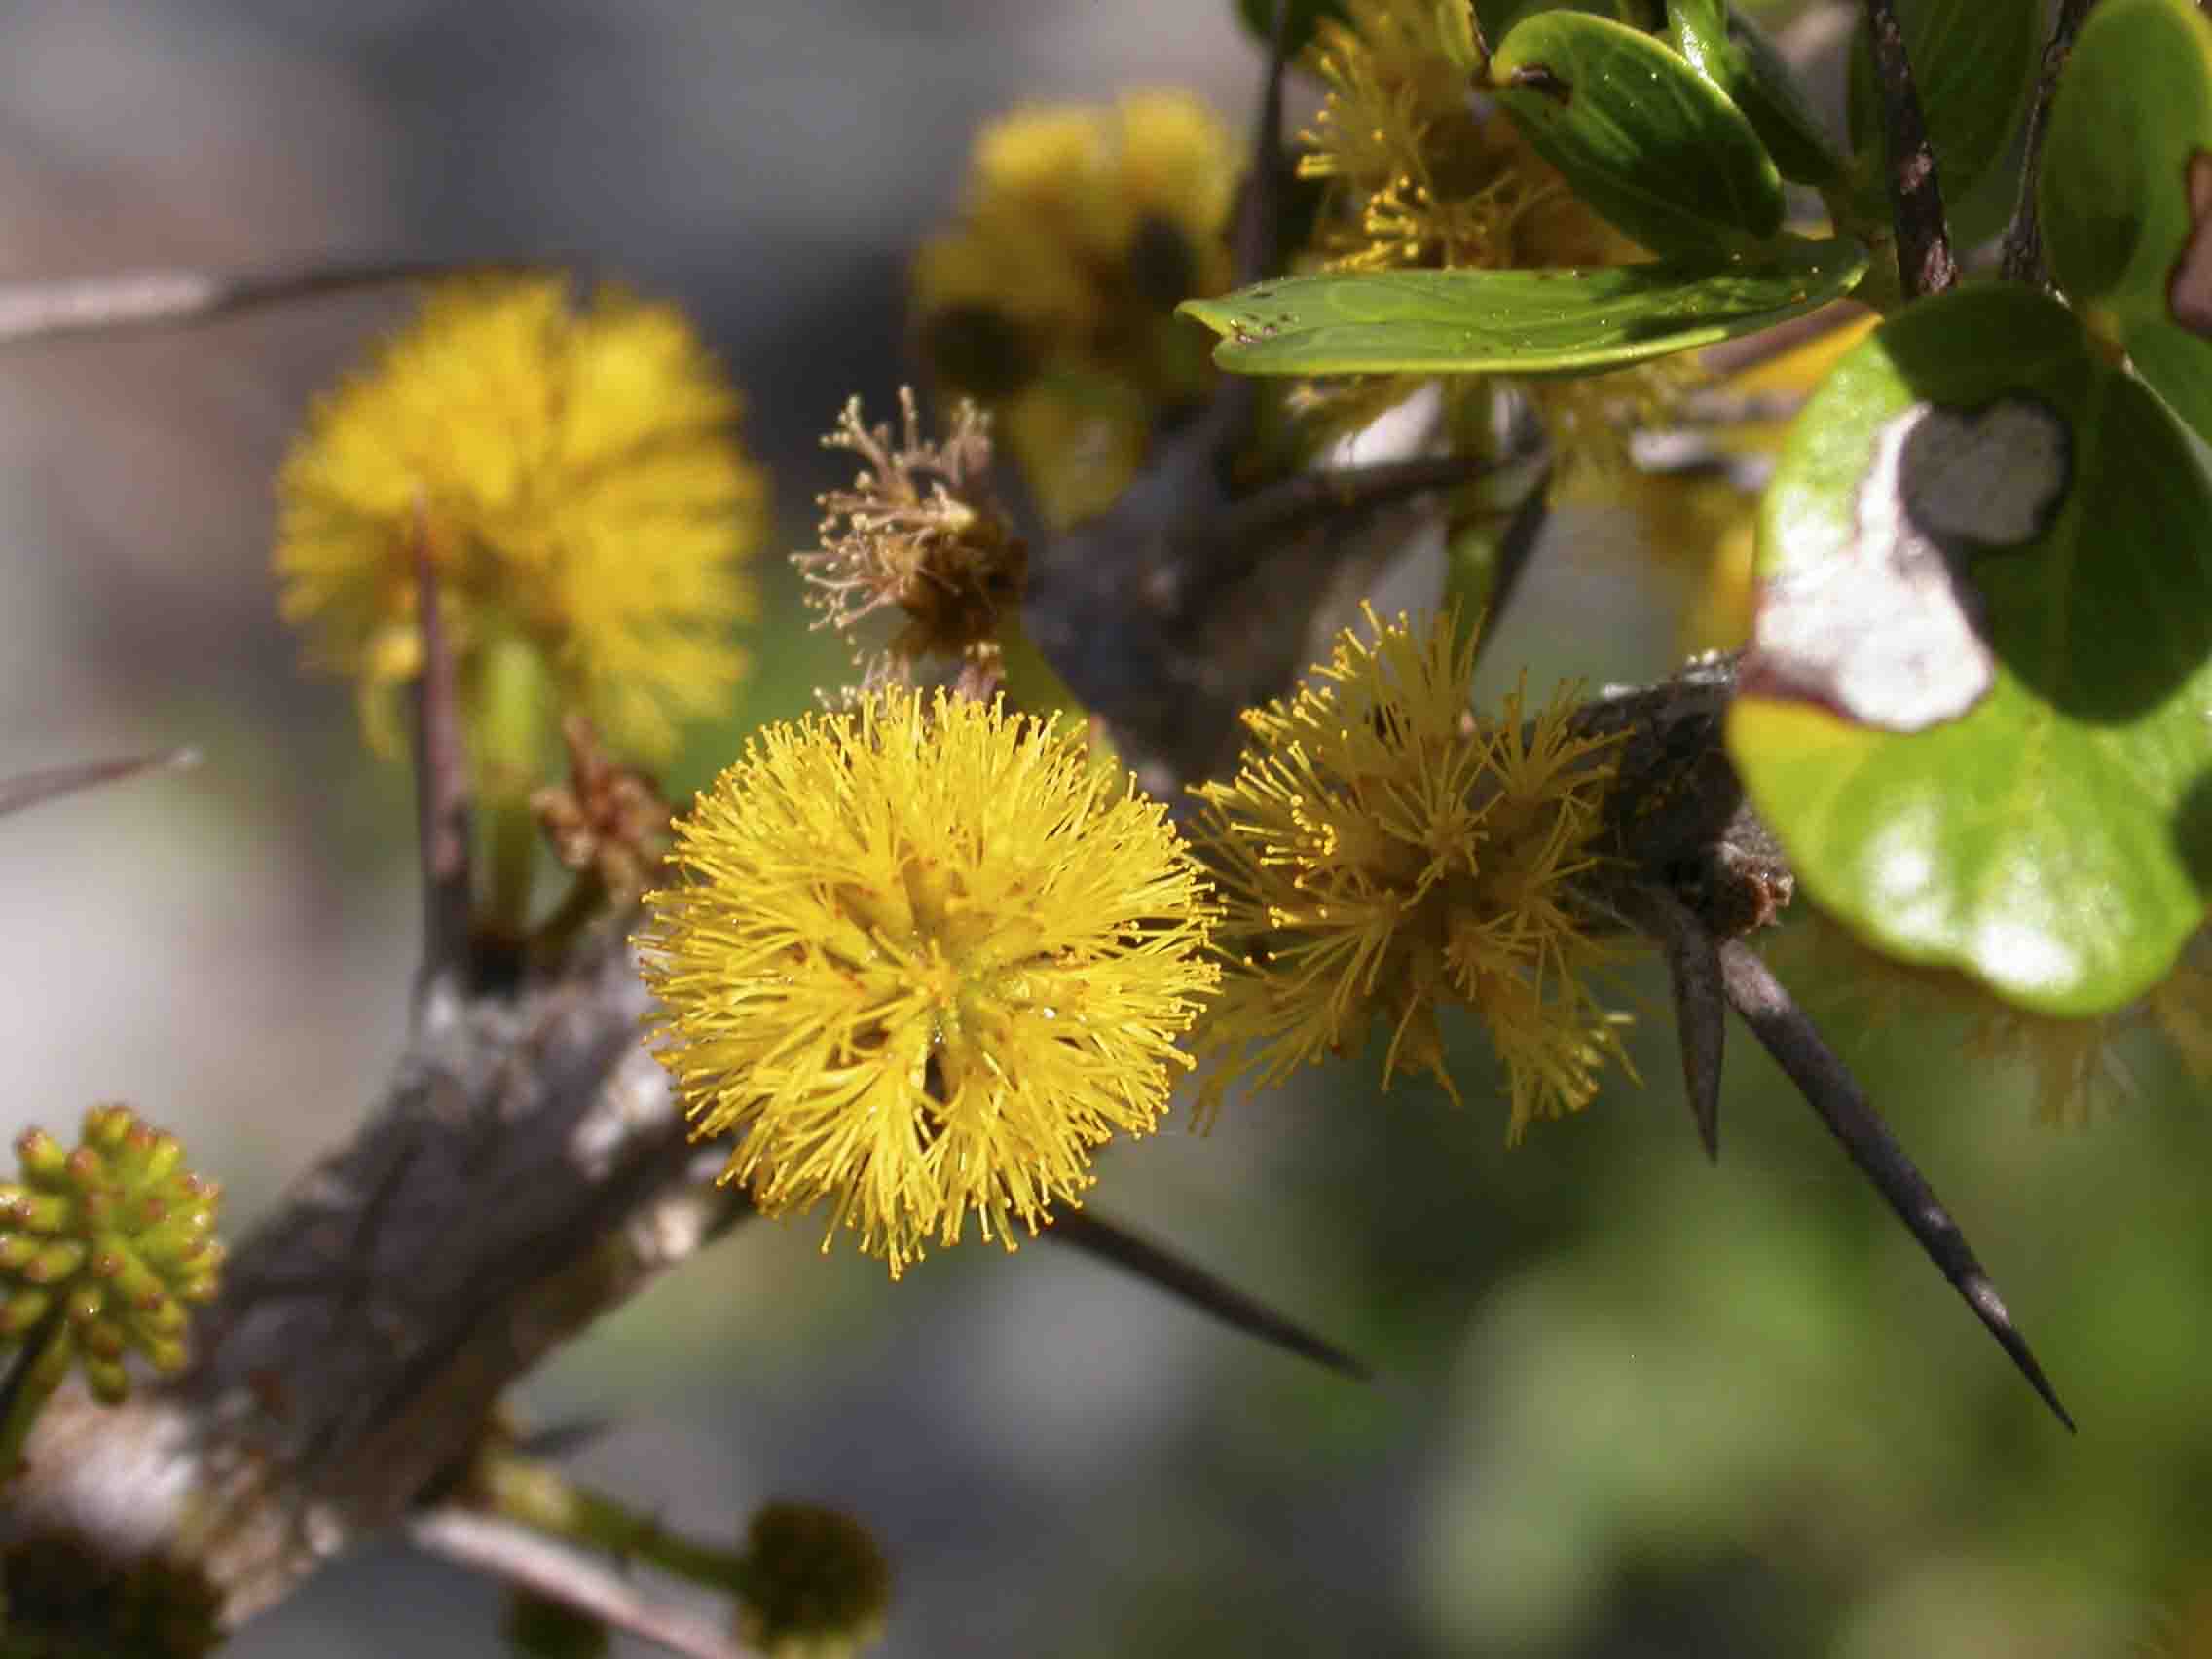 Poke-me-boy tree flowers, Acacia anegadensis